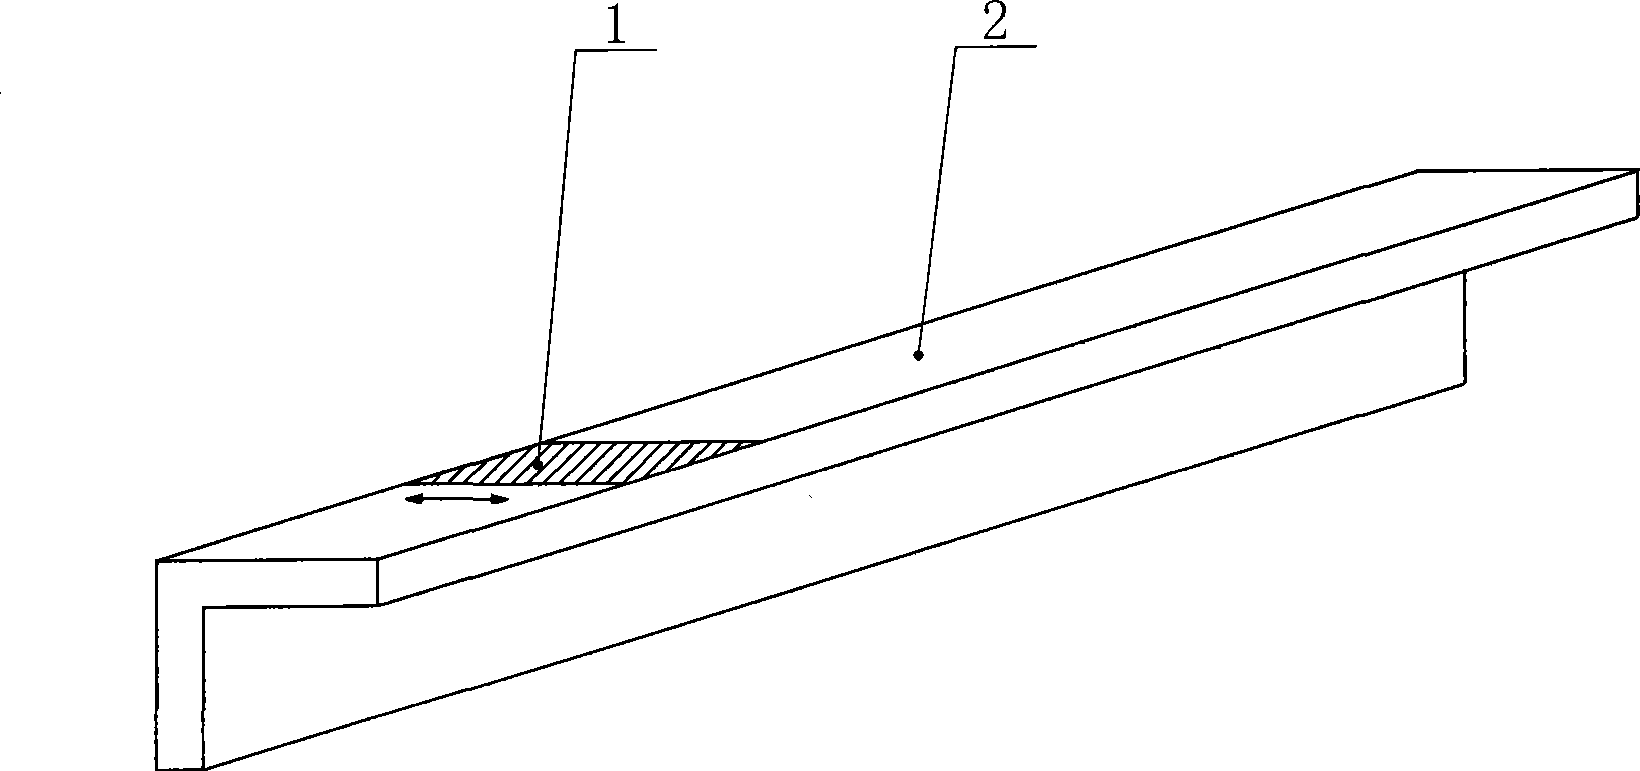 Ultrasonic detecting method for electric power pylon steel angle